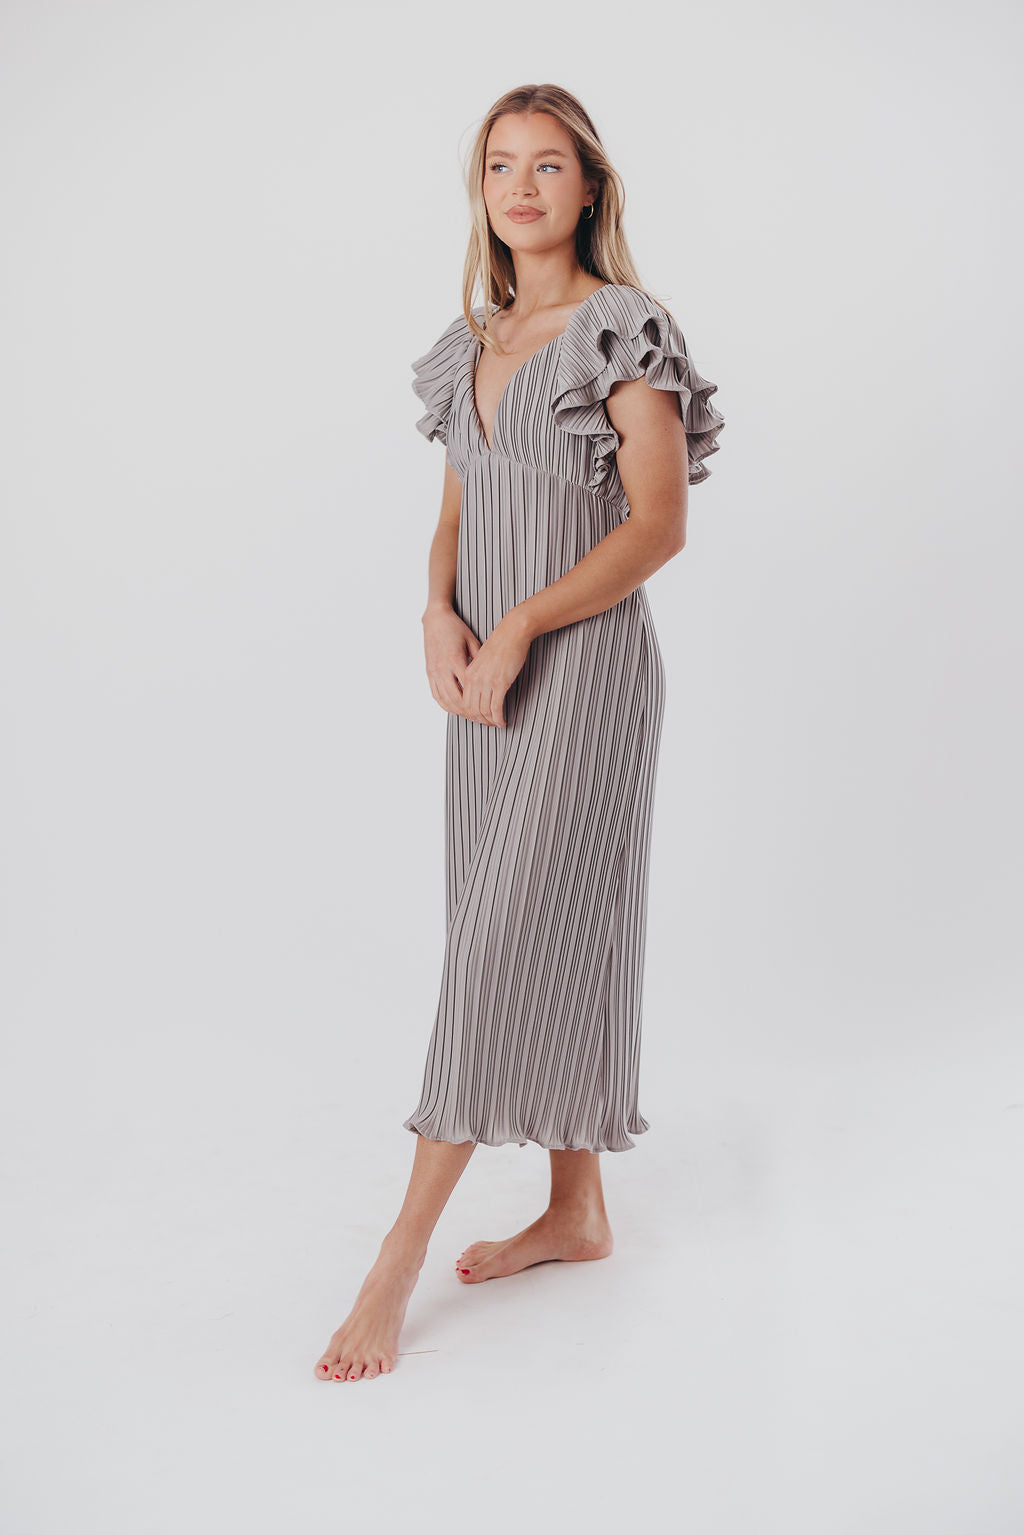 Lucky Charm Midi Dress in Grey - Bump Friendly & Inclusive Sizing (S-3XL)